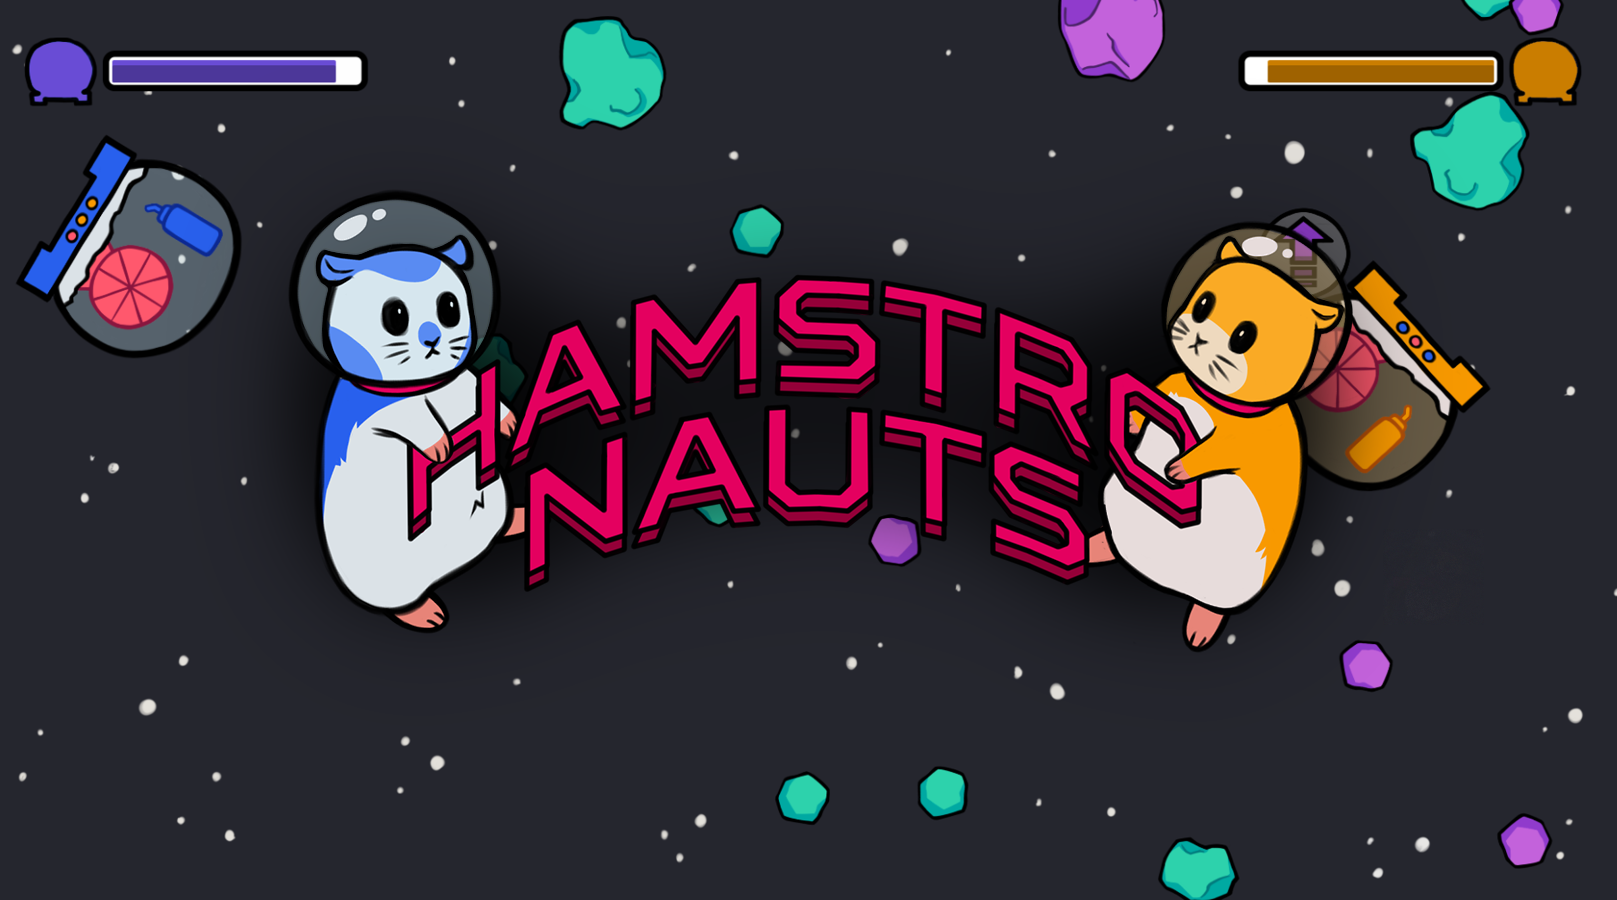 Hamstronauts